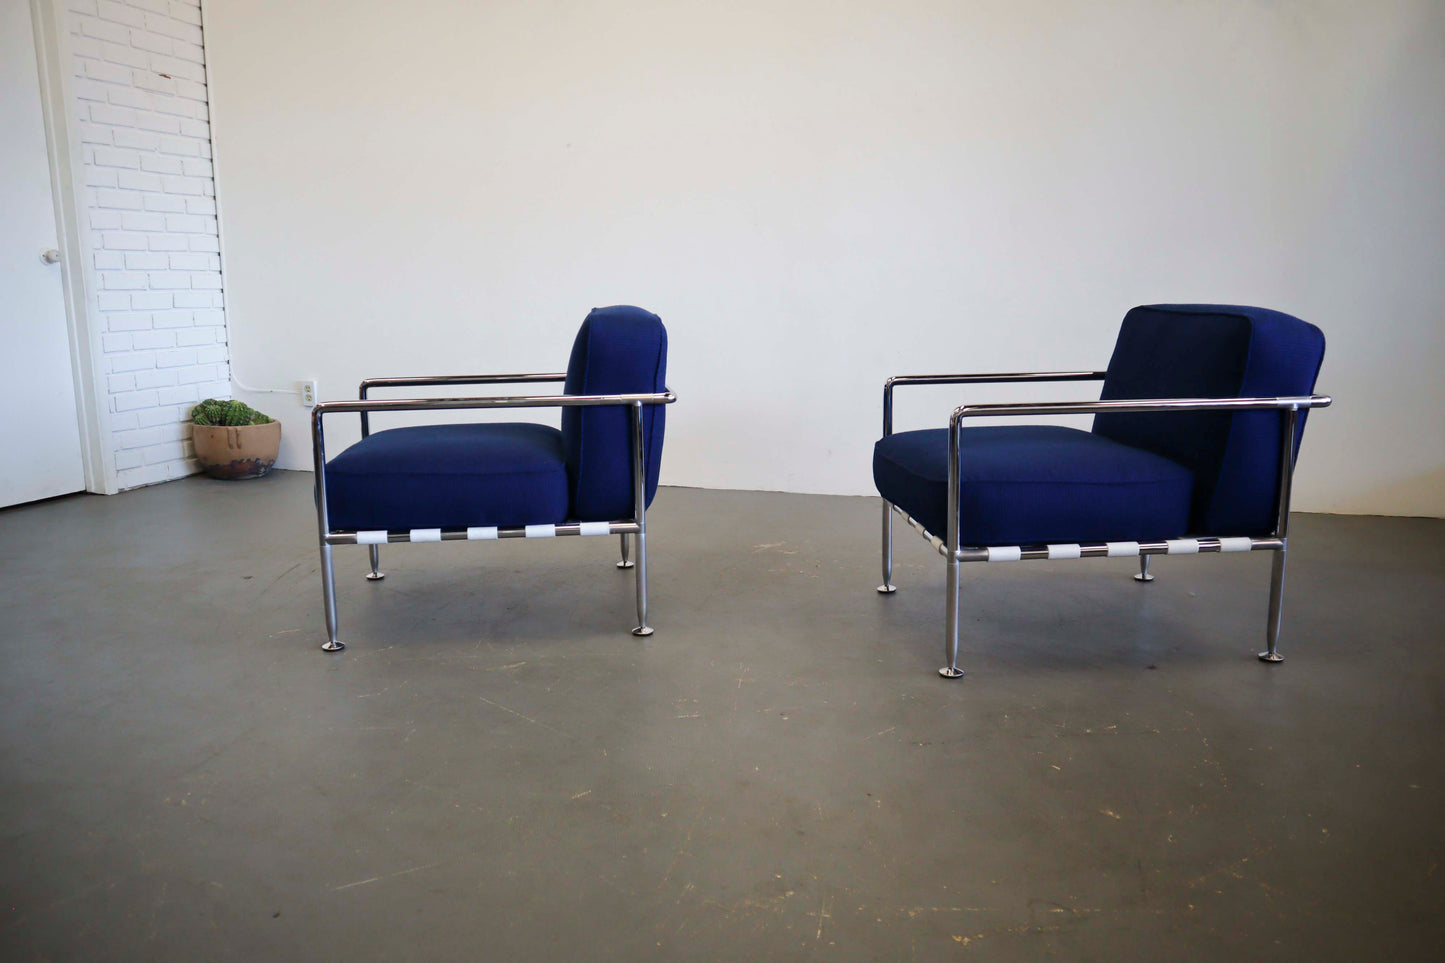 Antonio Citterio "Free Time" Lounge Chairs